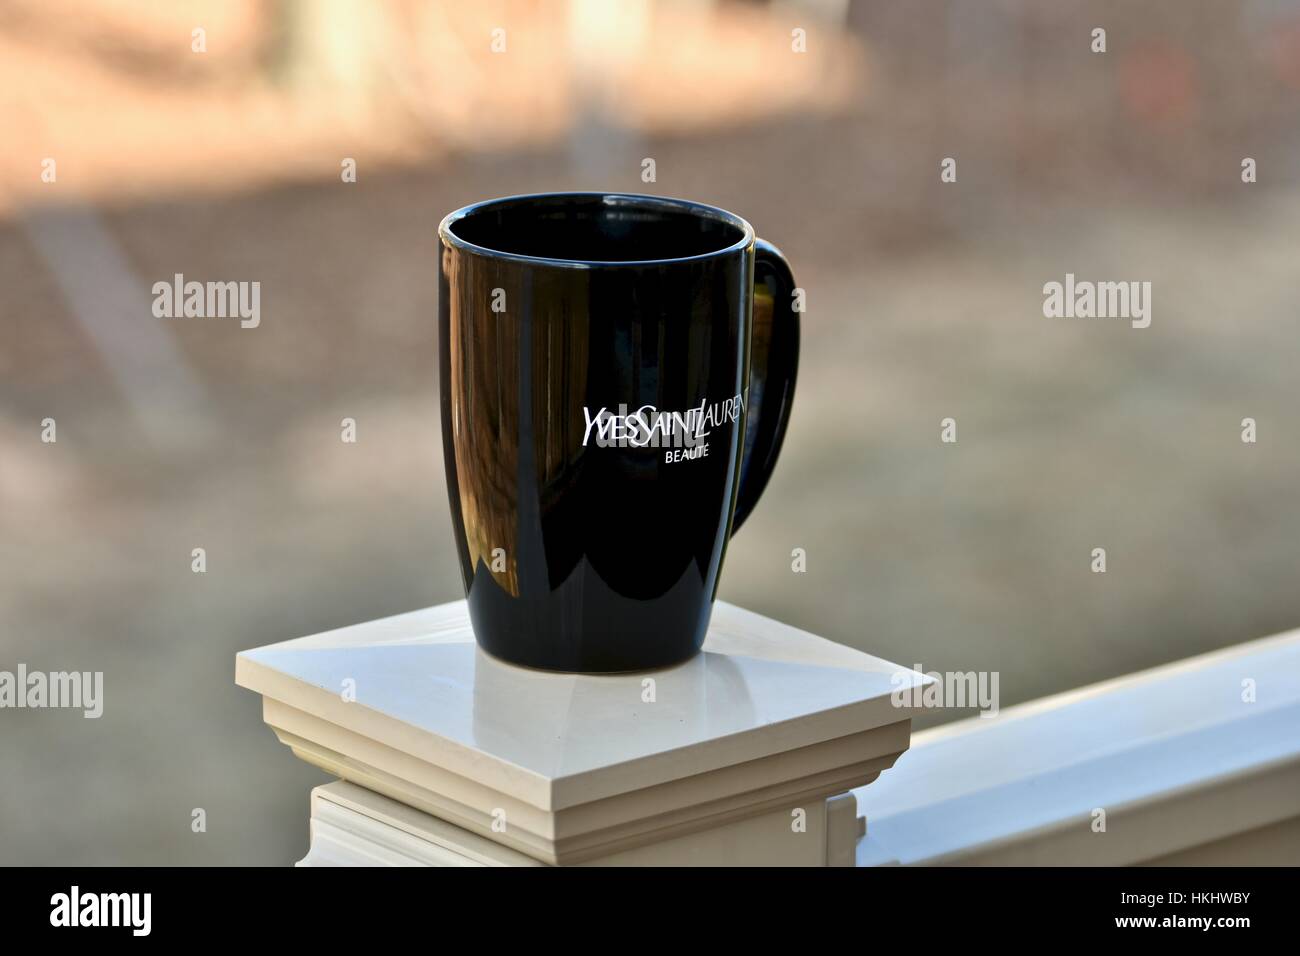 A black coffee mug representing the Yves Saint Laurent brand Stock Photo -  Alamy